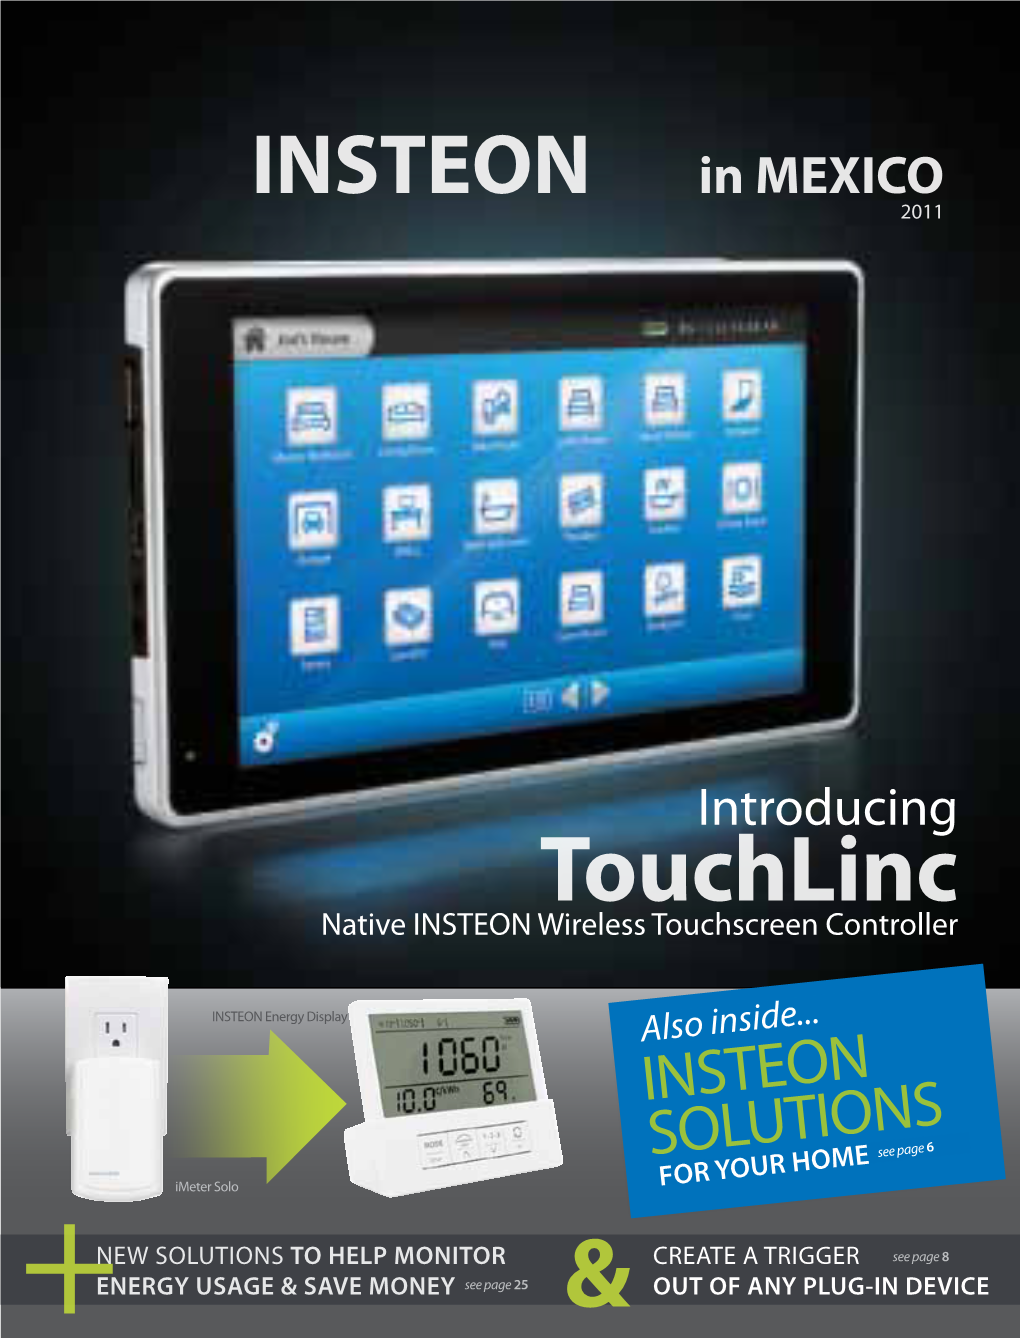 Touchlinc Native INSTEON Wireless Touchscreen Controller